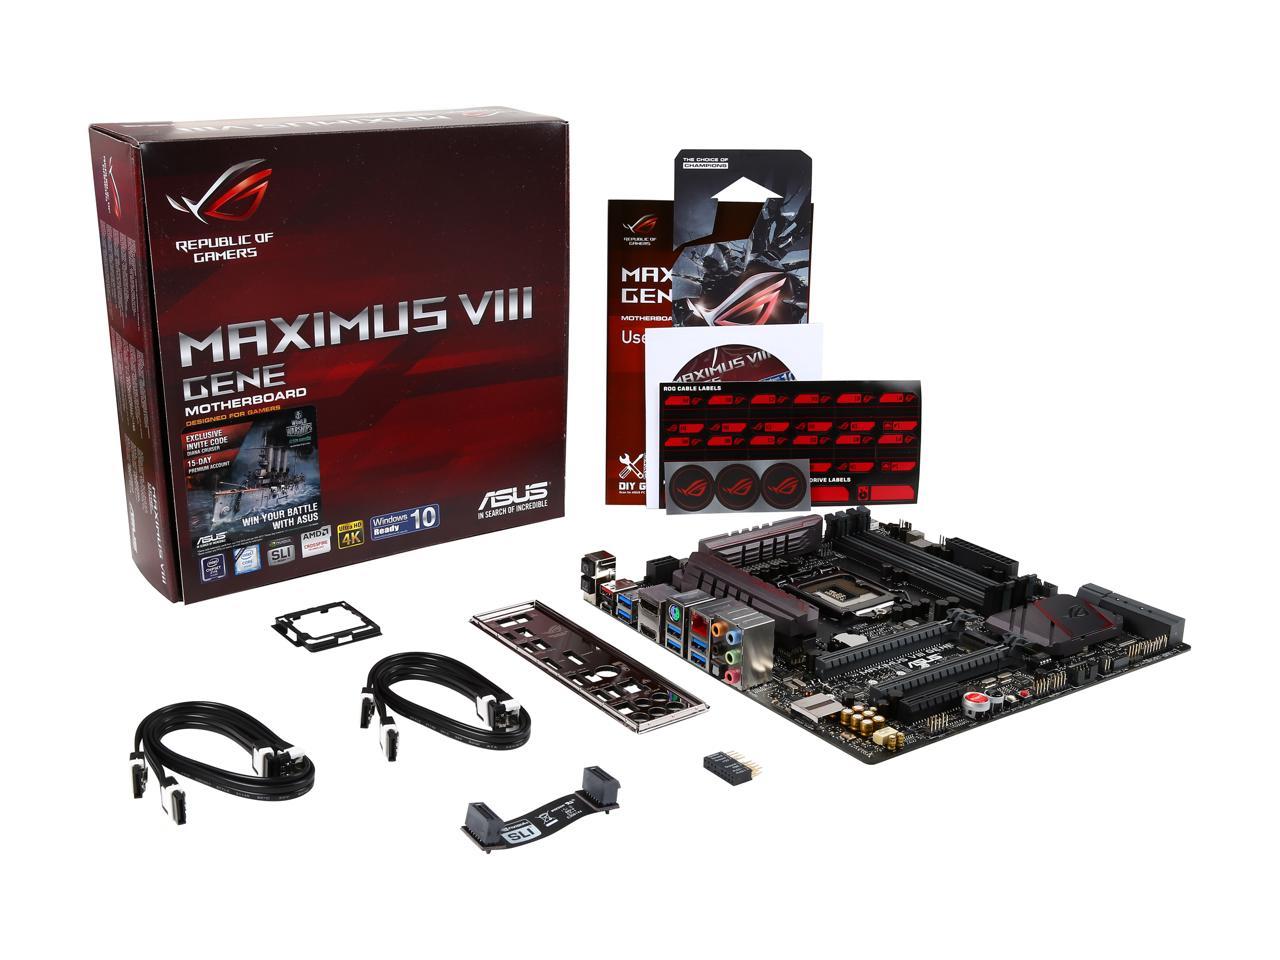 ASUS ROG MAXIMUS VIII GENE LGA 1151 Intel Z170 HDMI SATA 6Gb/s USB 3.1 Micro ATX Intel Gaming Motherboard